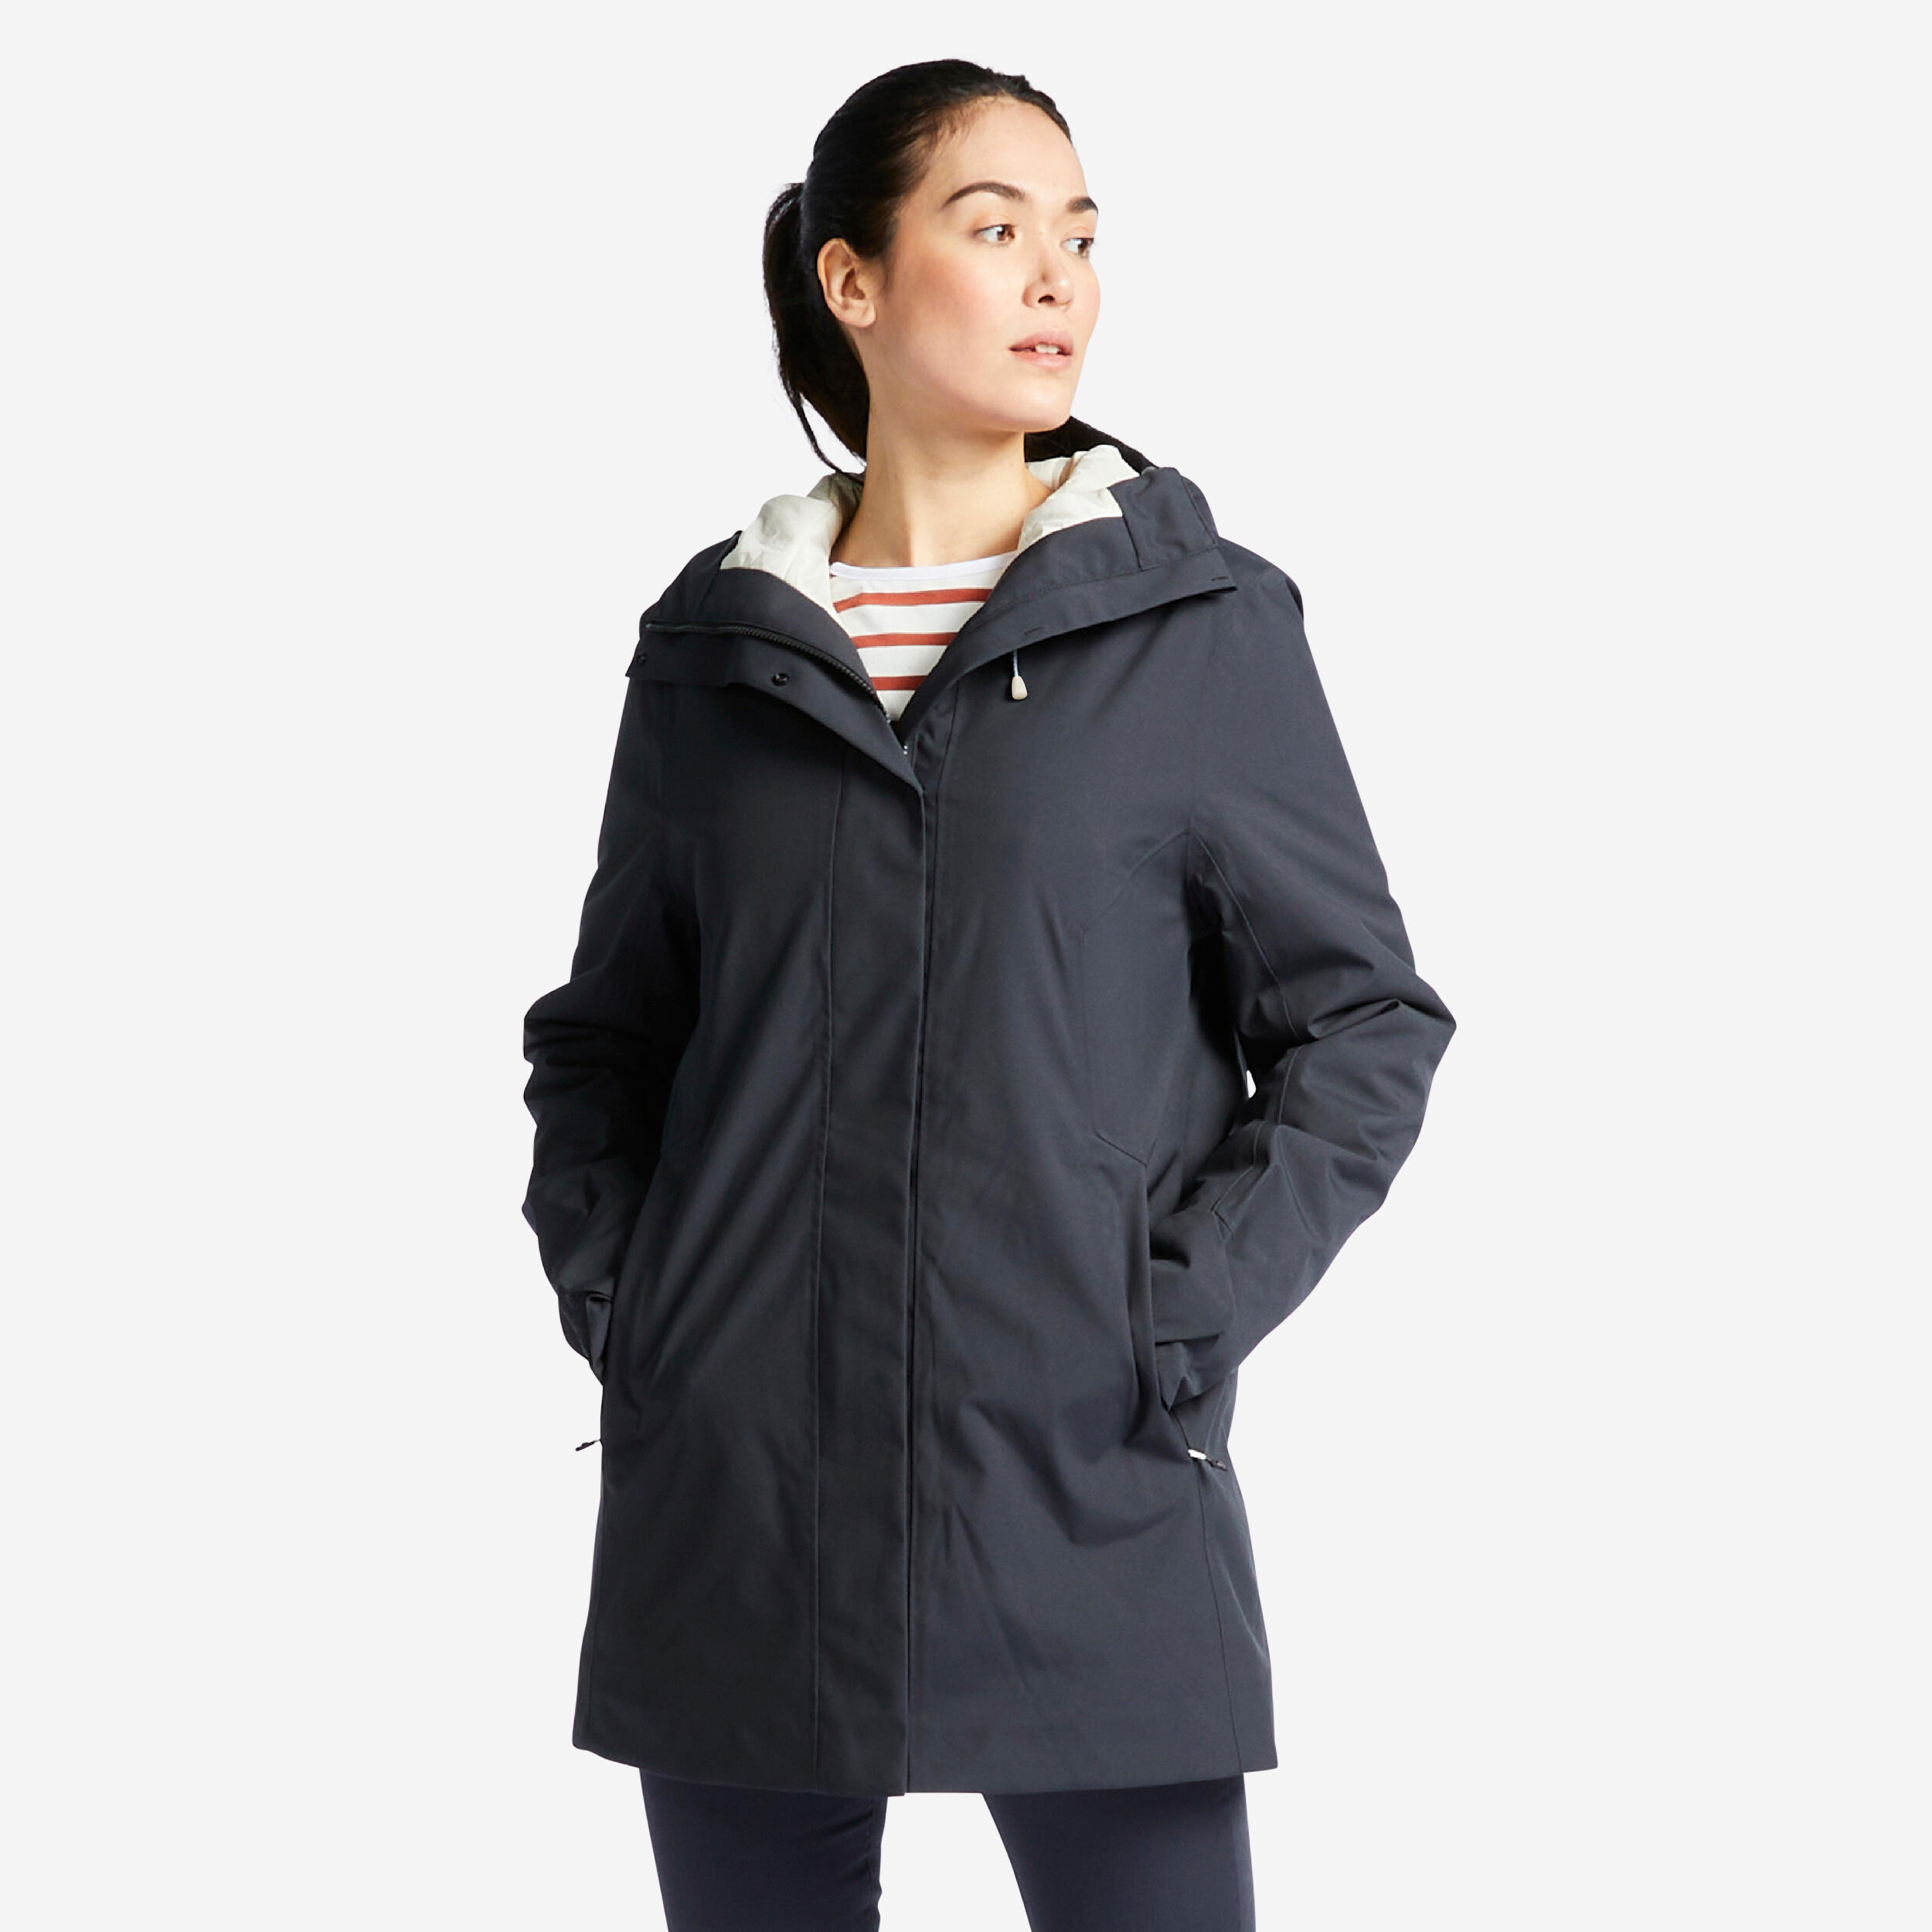 Women's Warm Waterproof Windproof Jacket SAILING 300 - Dark grey 1/13